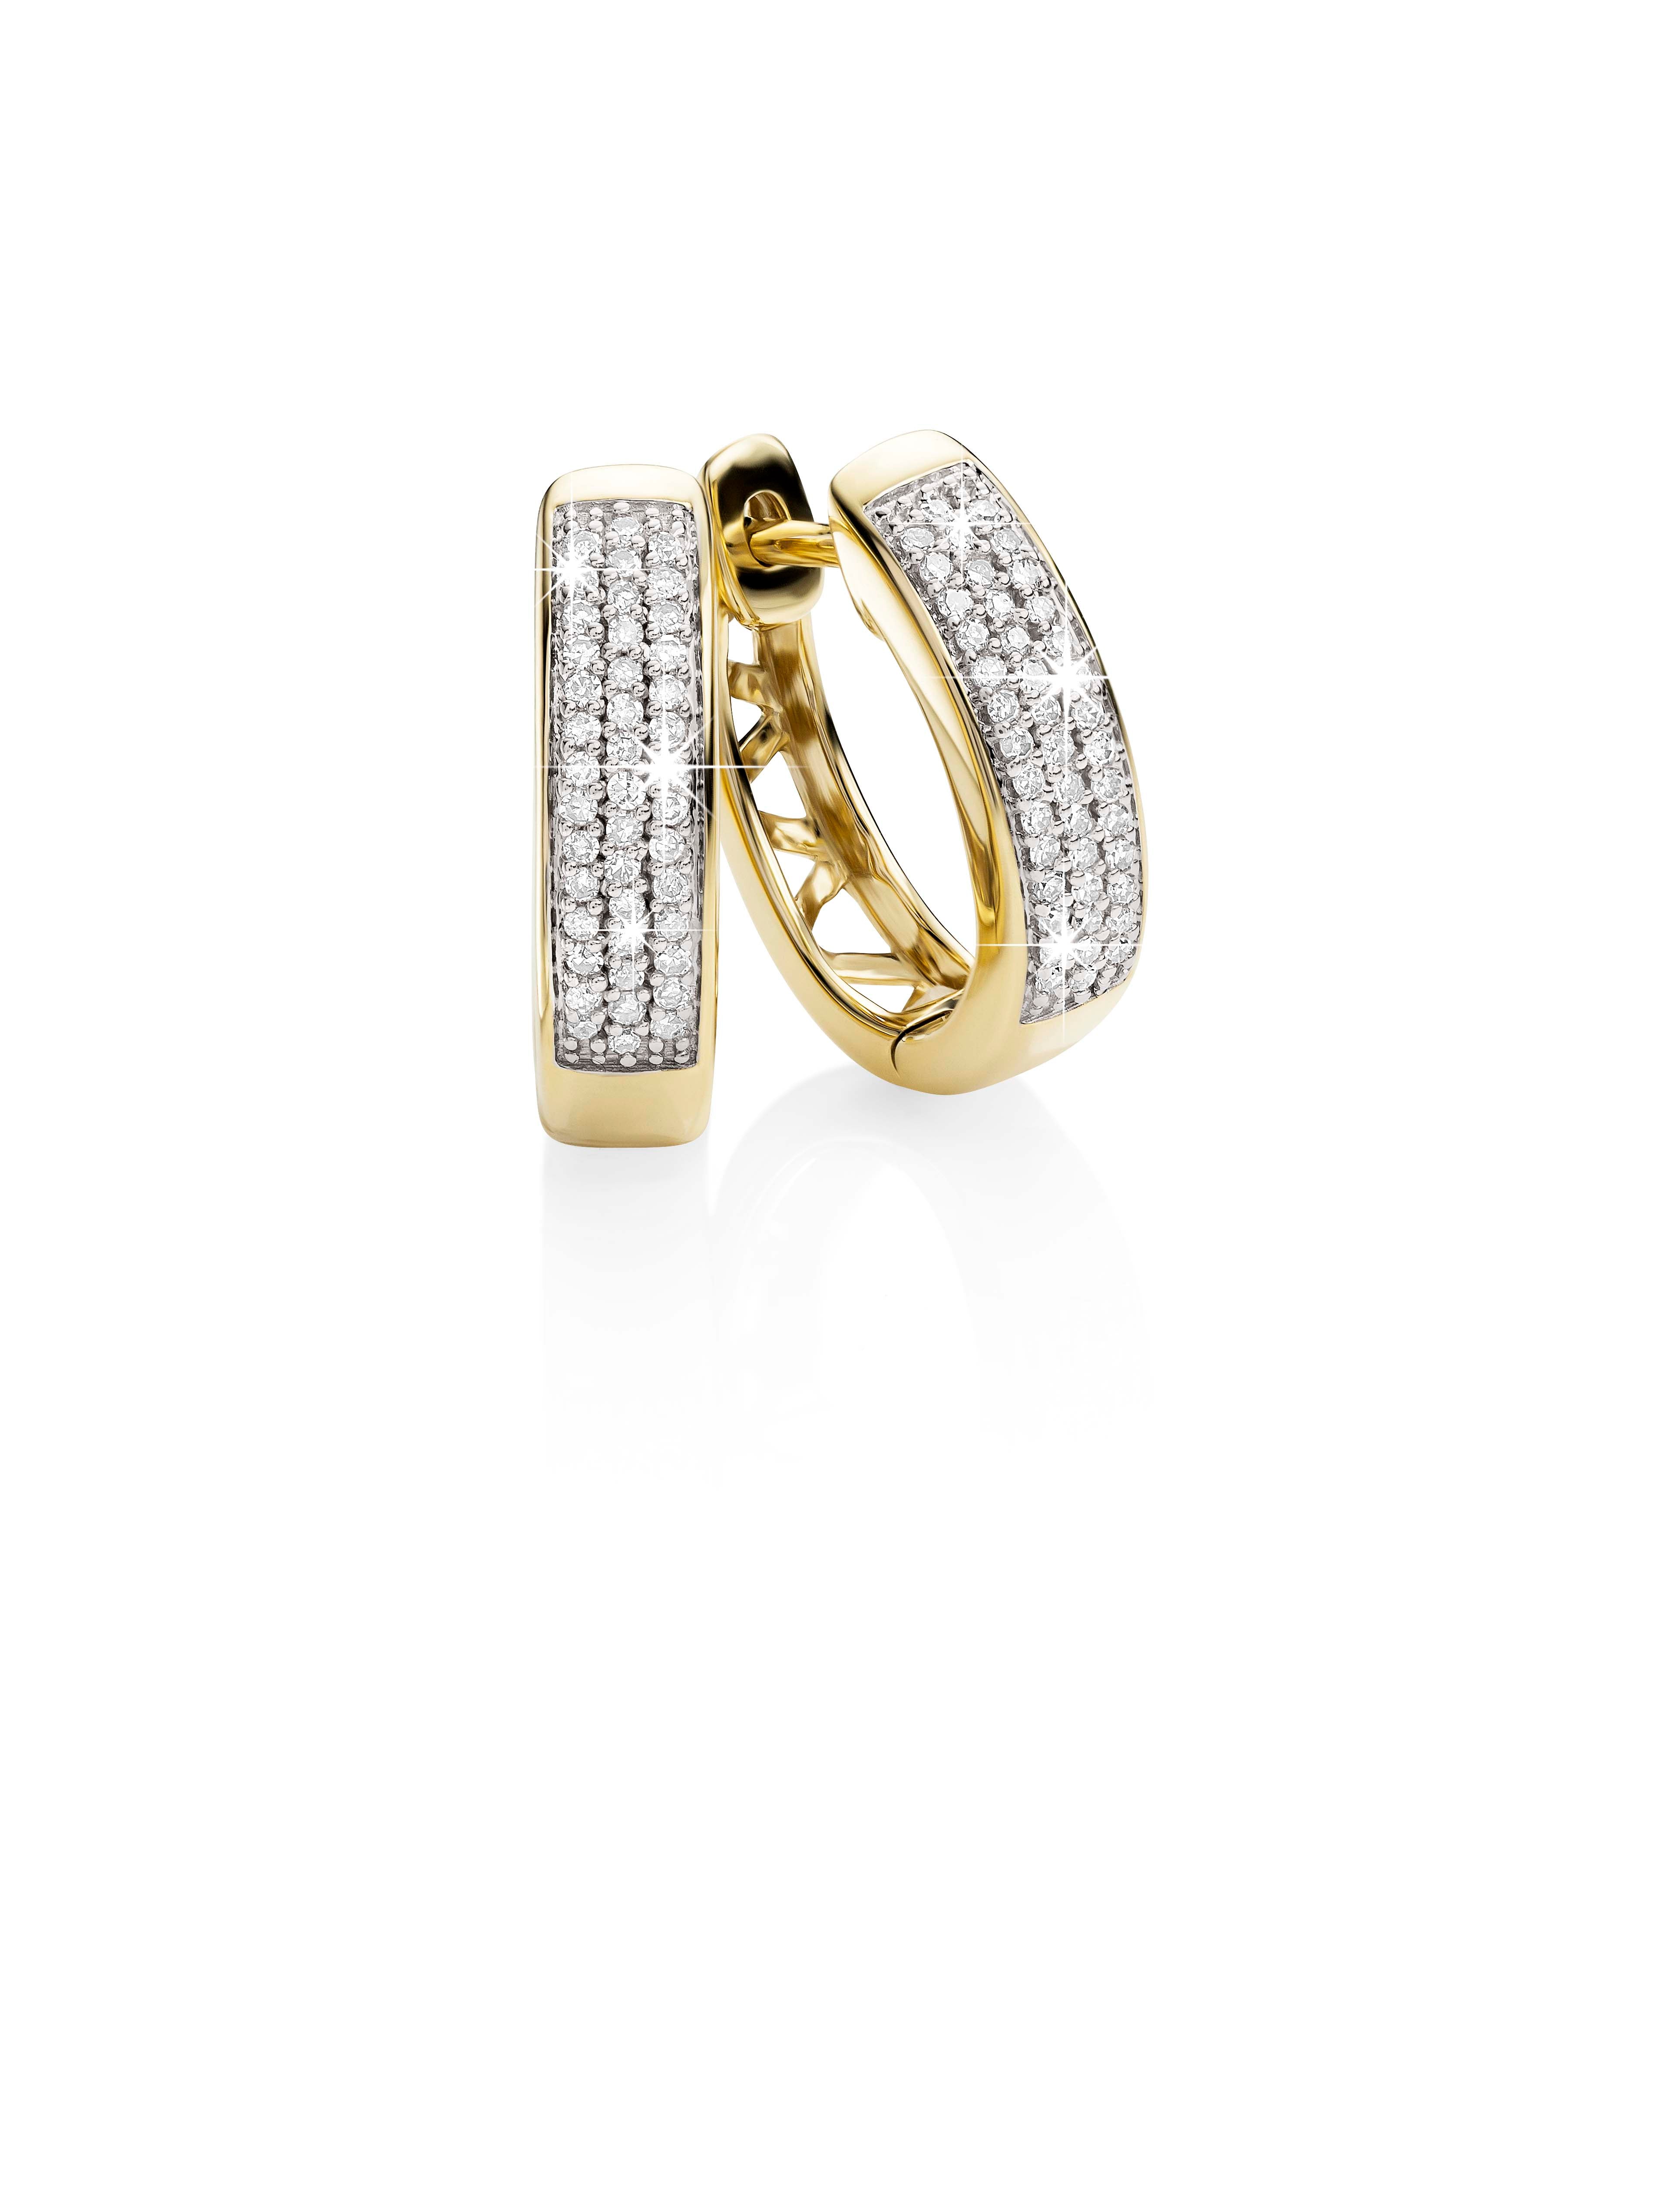 9ct gold 0.15ct diamond earrings